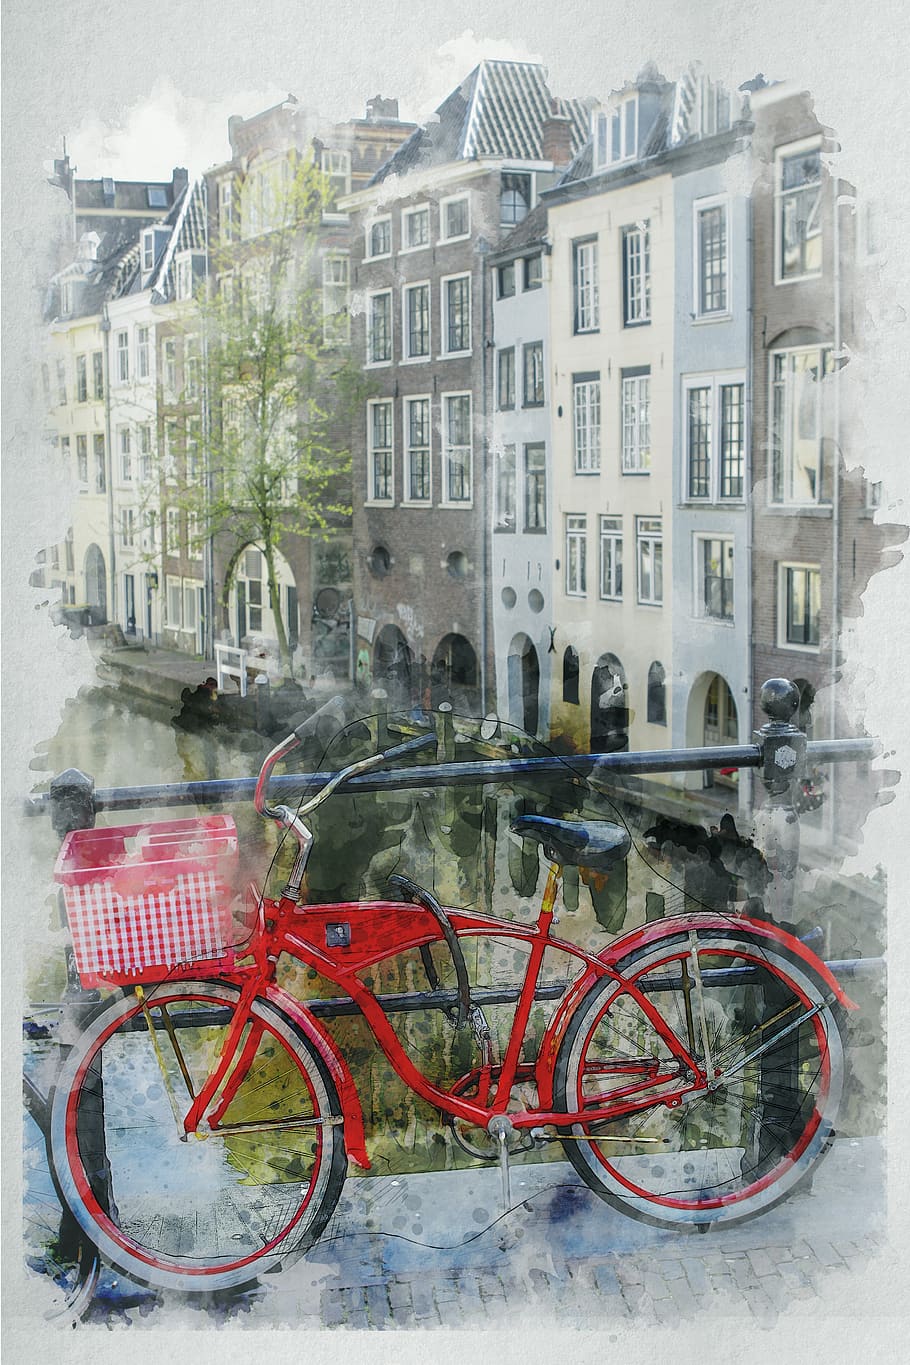 utrecht, netherland, bike, city, channel, tourism, tour, buildings, canal, scenic